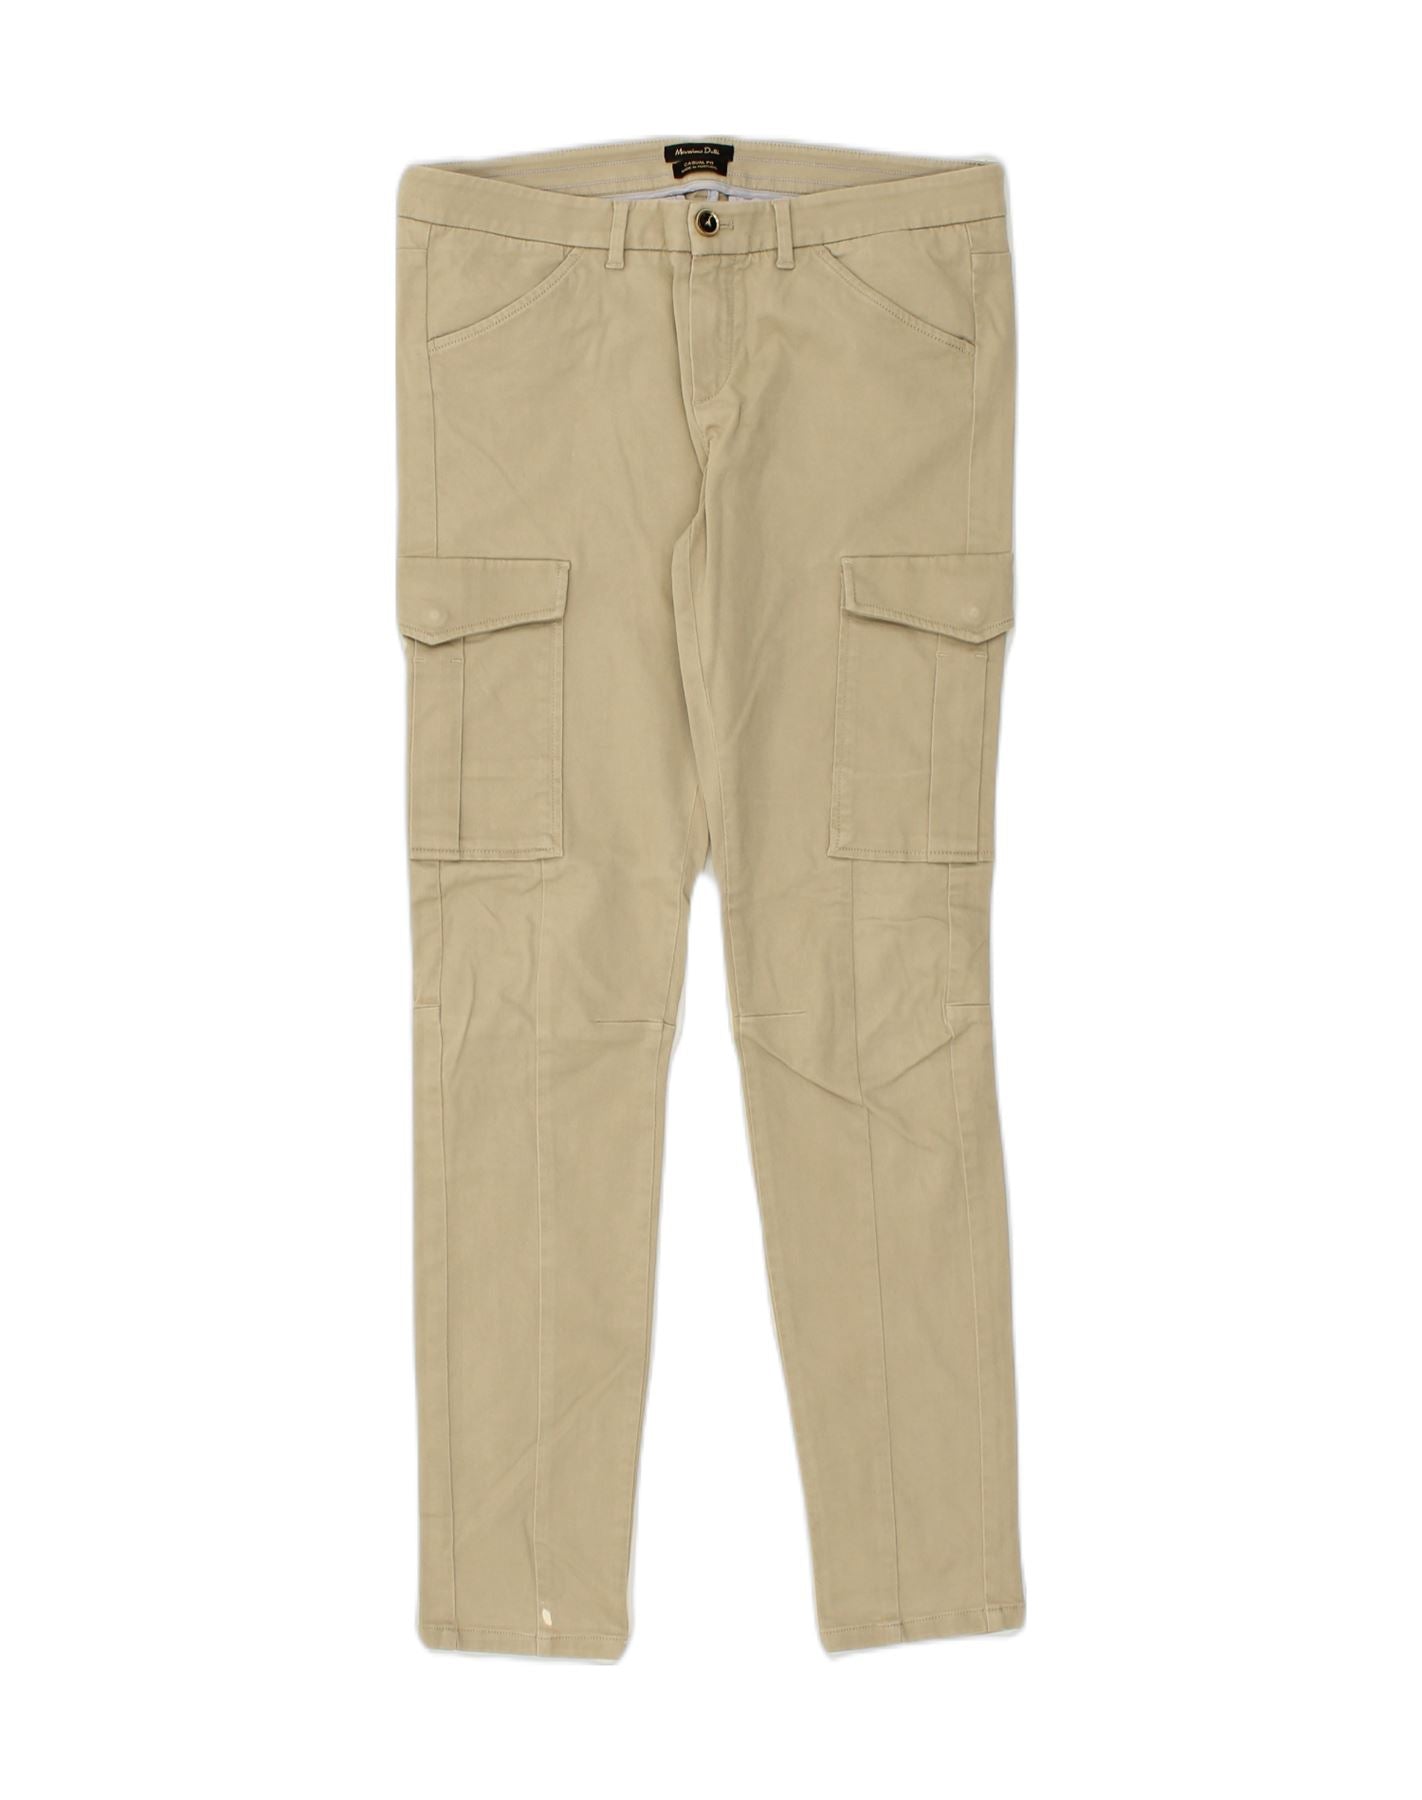 Massimo Dutti Chino Trousers Beige Women's Size 6 Straight Leg Zip Fly  Cotton | eBay